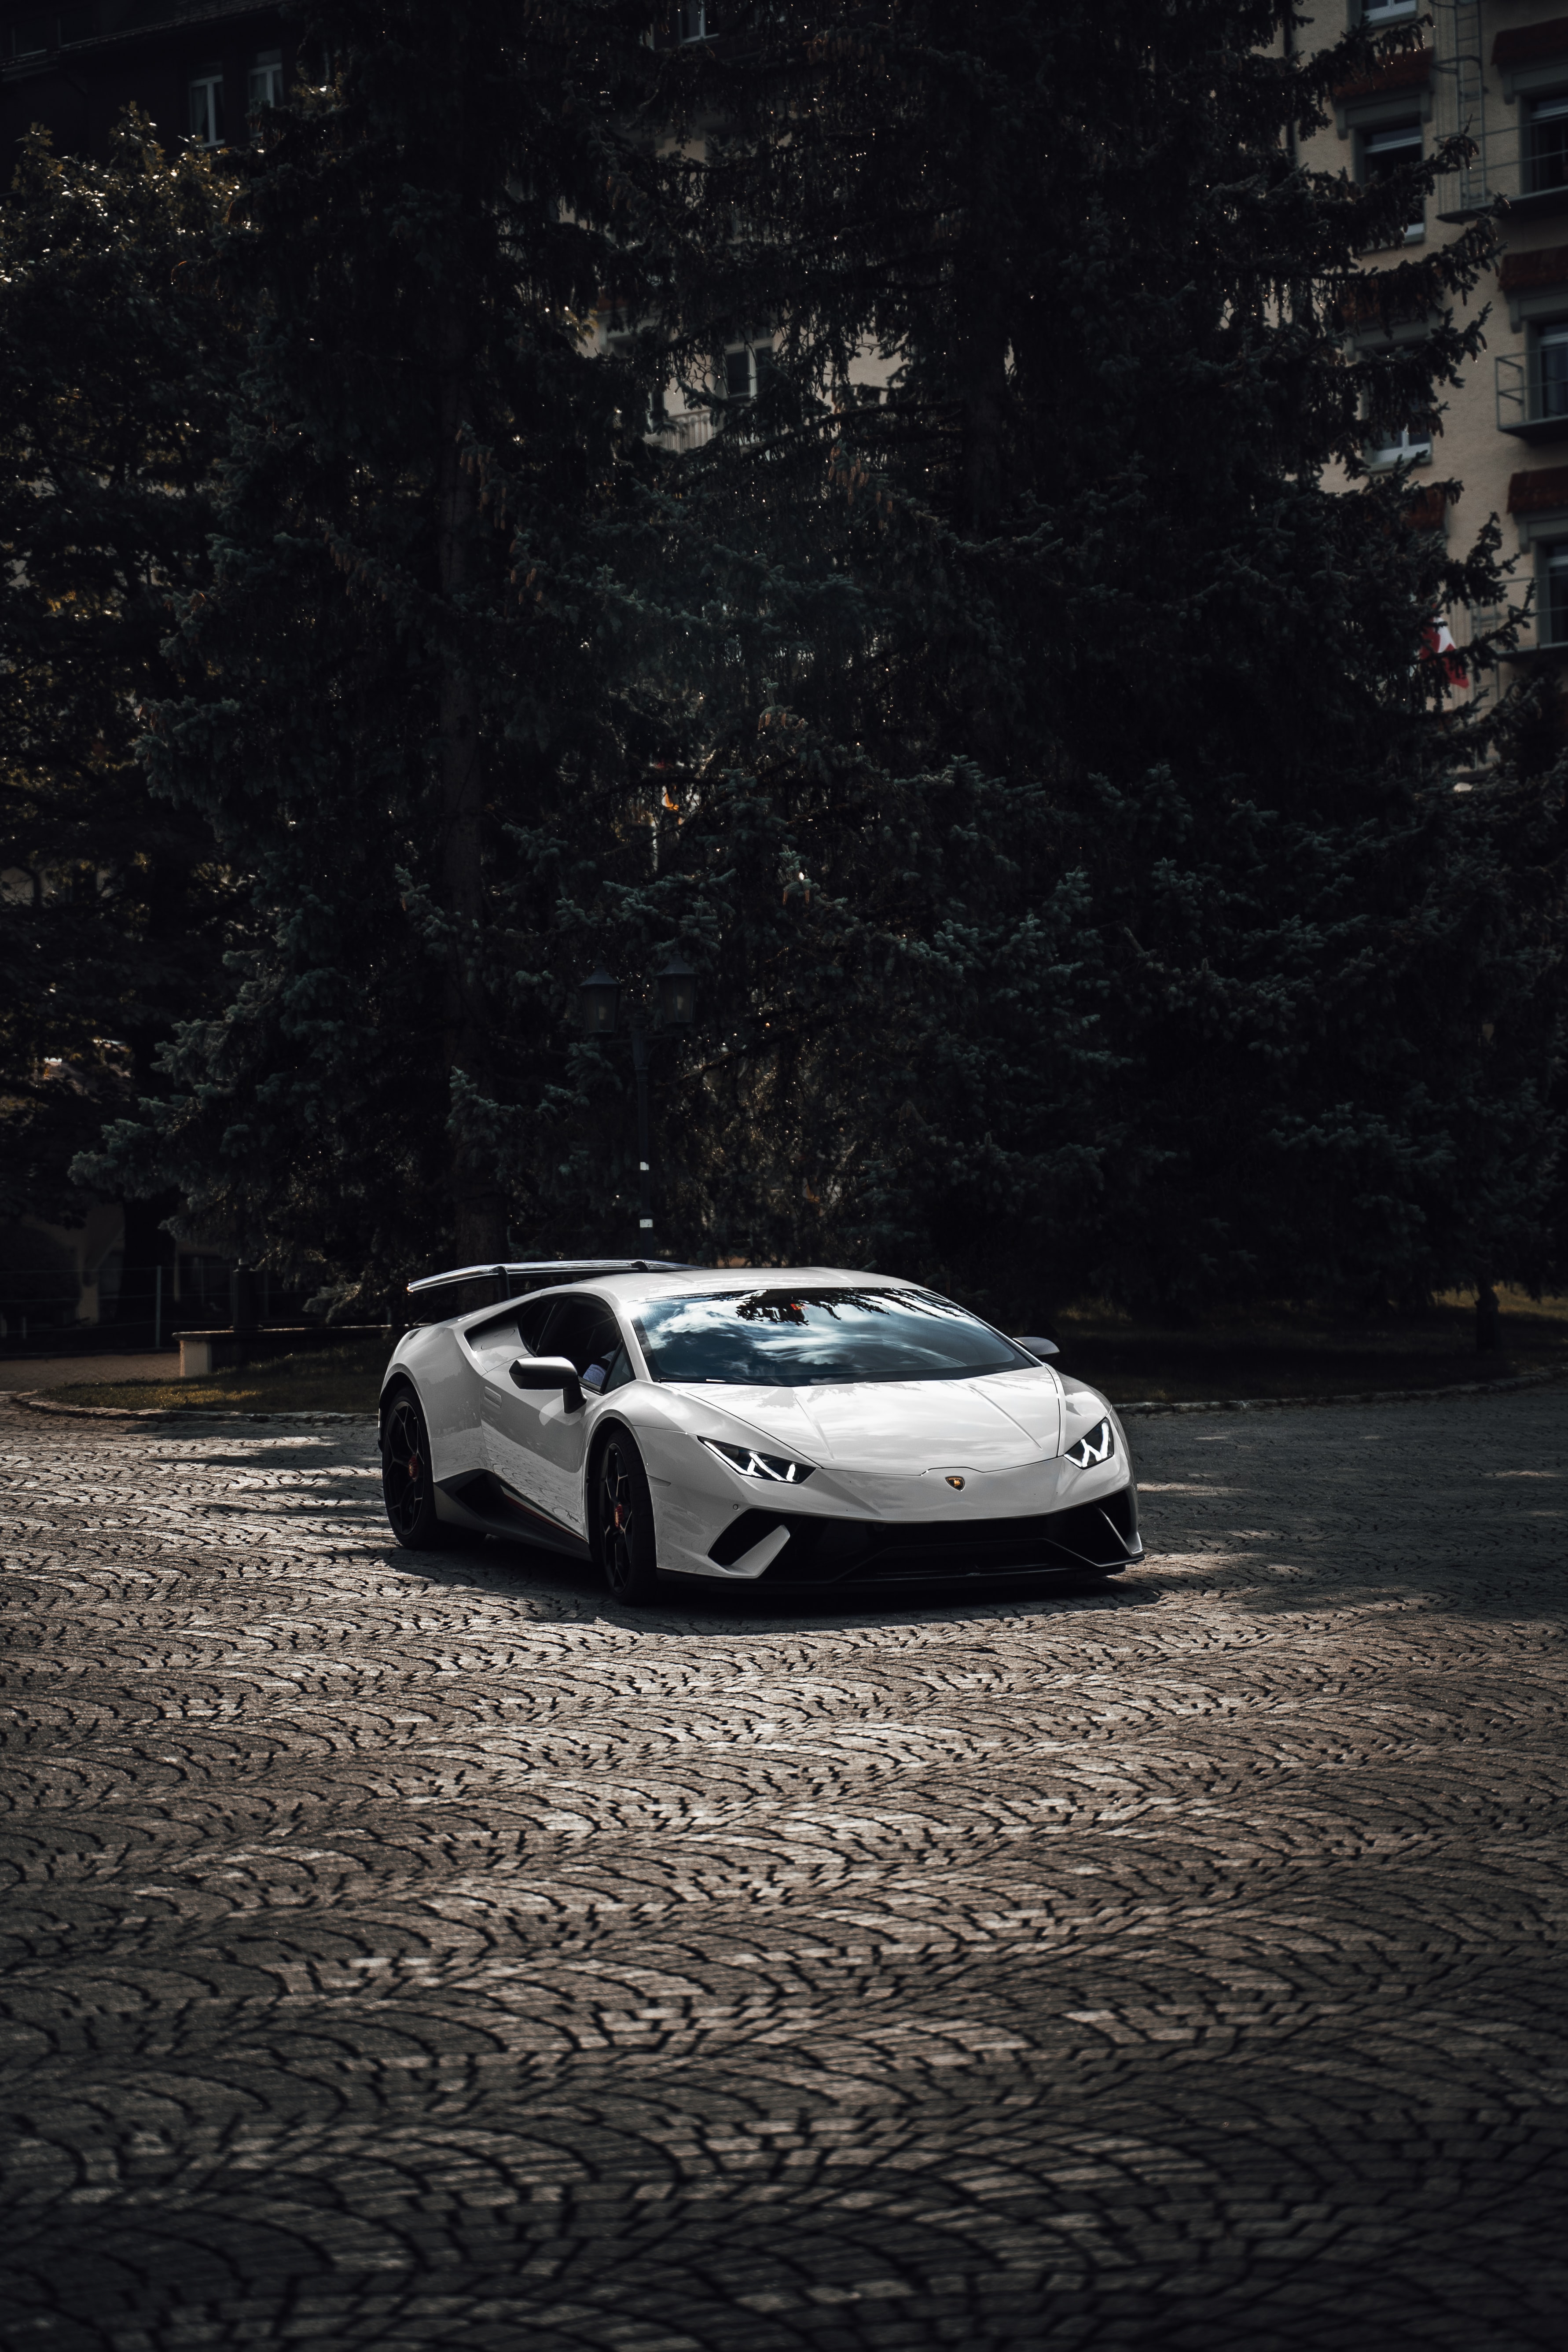 HD Lamborghini Android Images